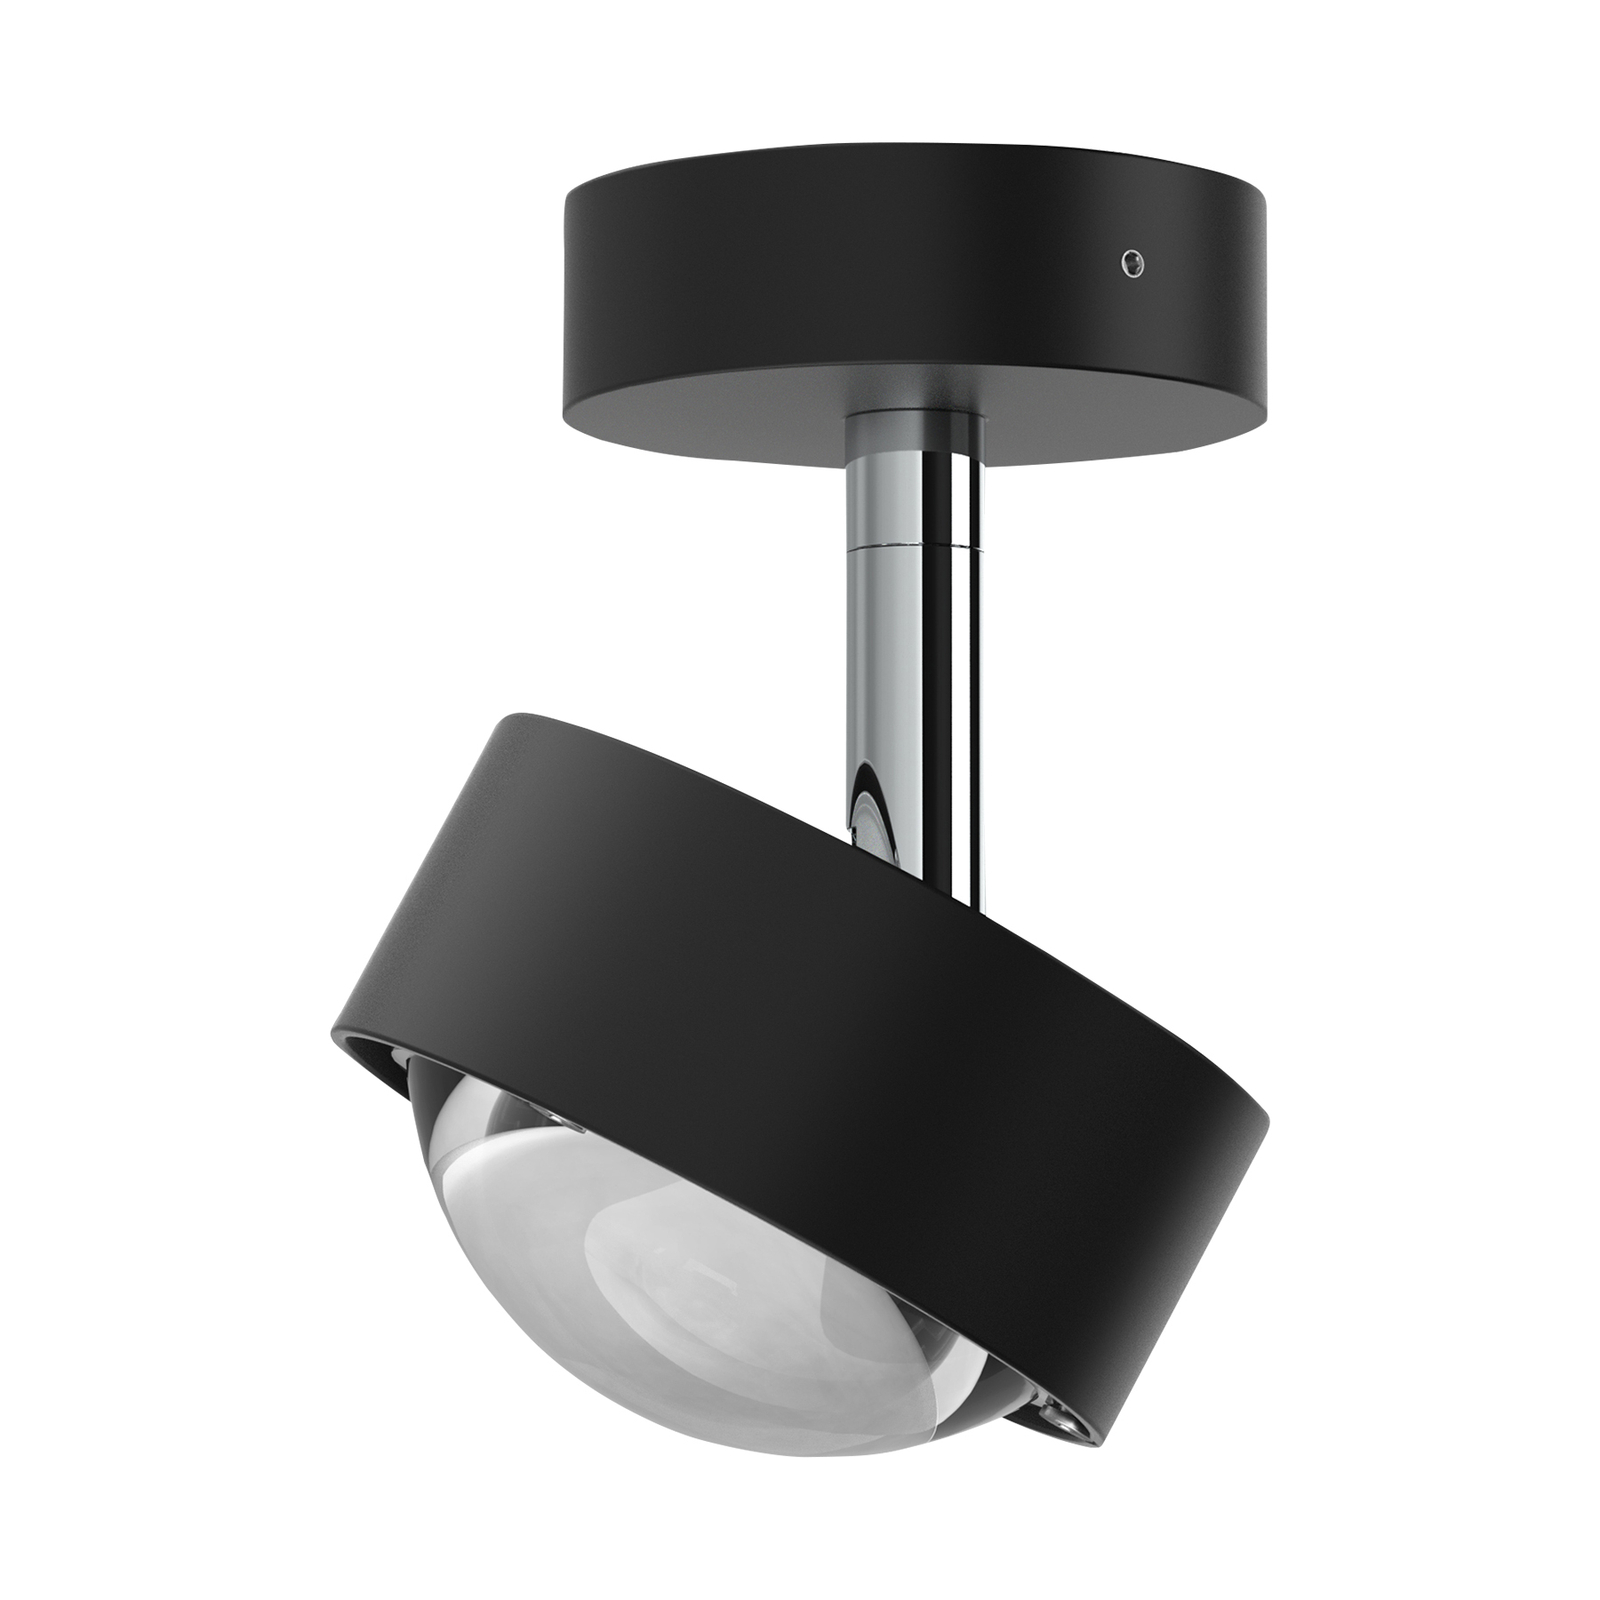 Puk Mini Turn LED lente spot chiara a 1 luce nero opaco